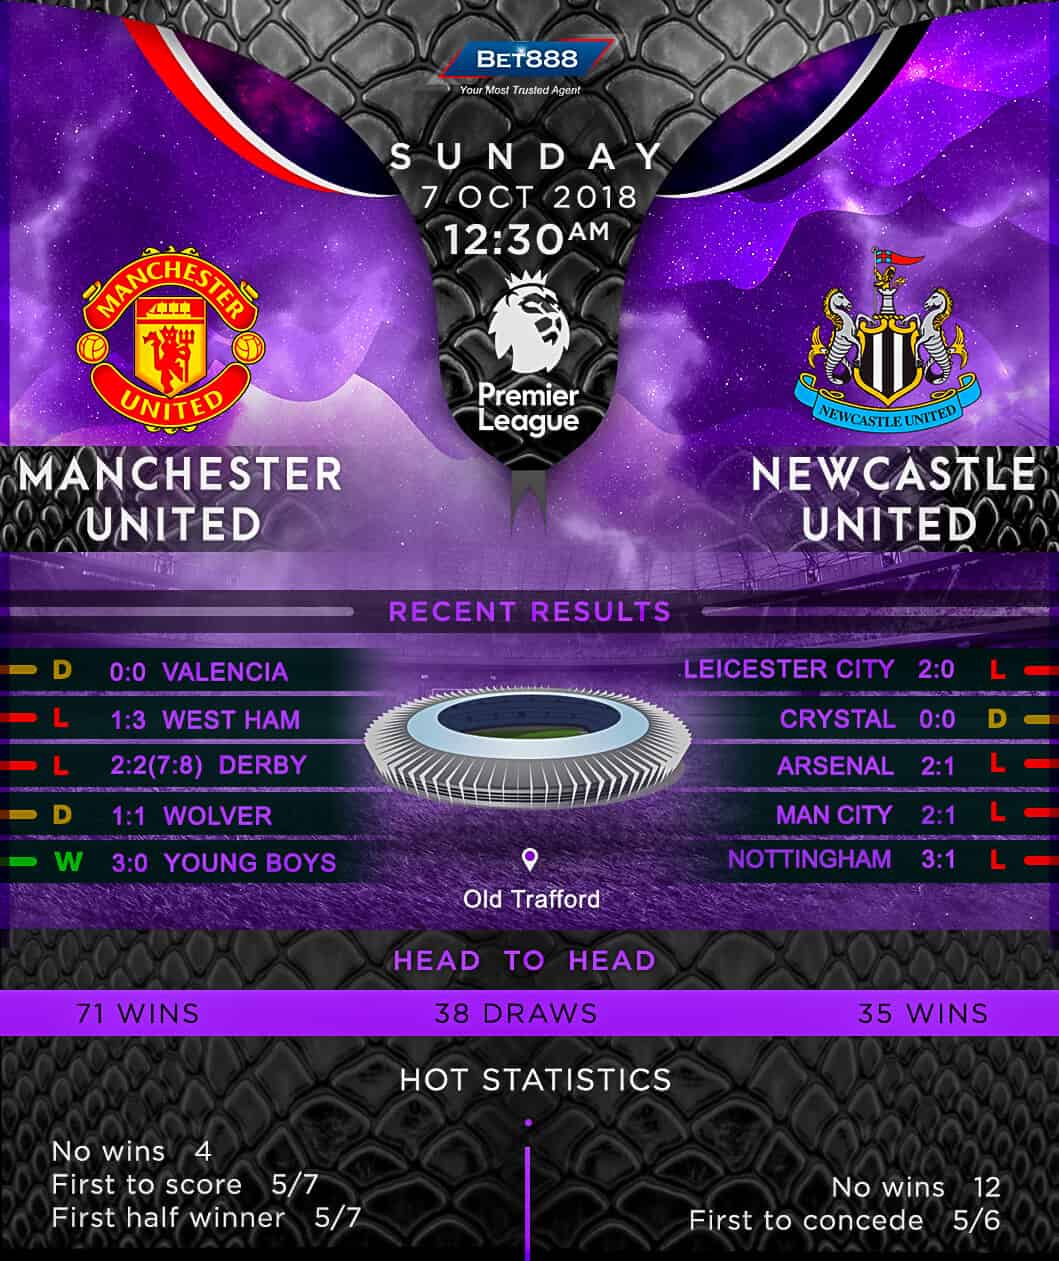 Manchester United vs Newcastle United 07/10/18